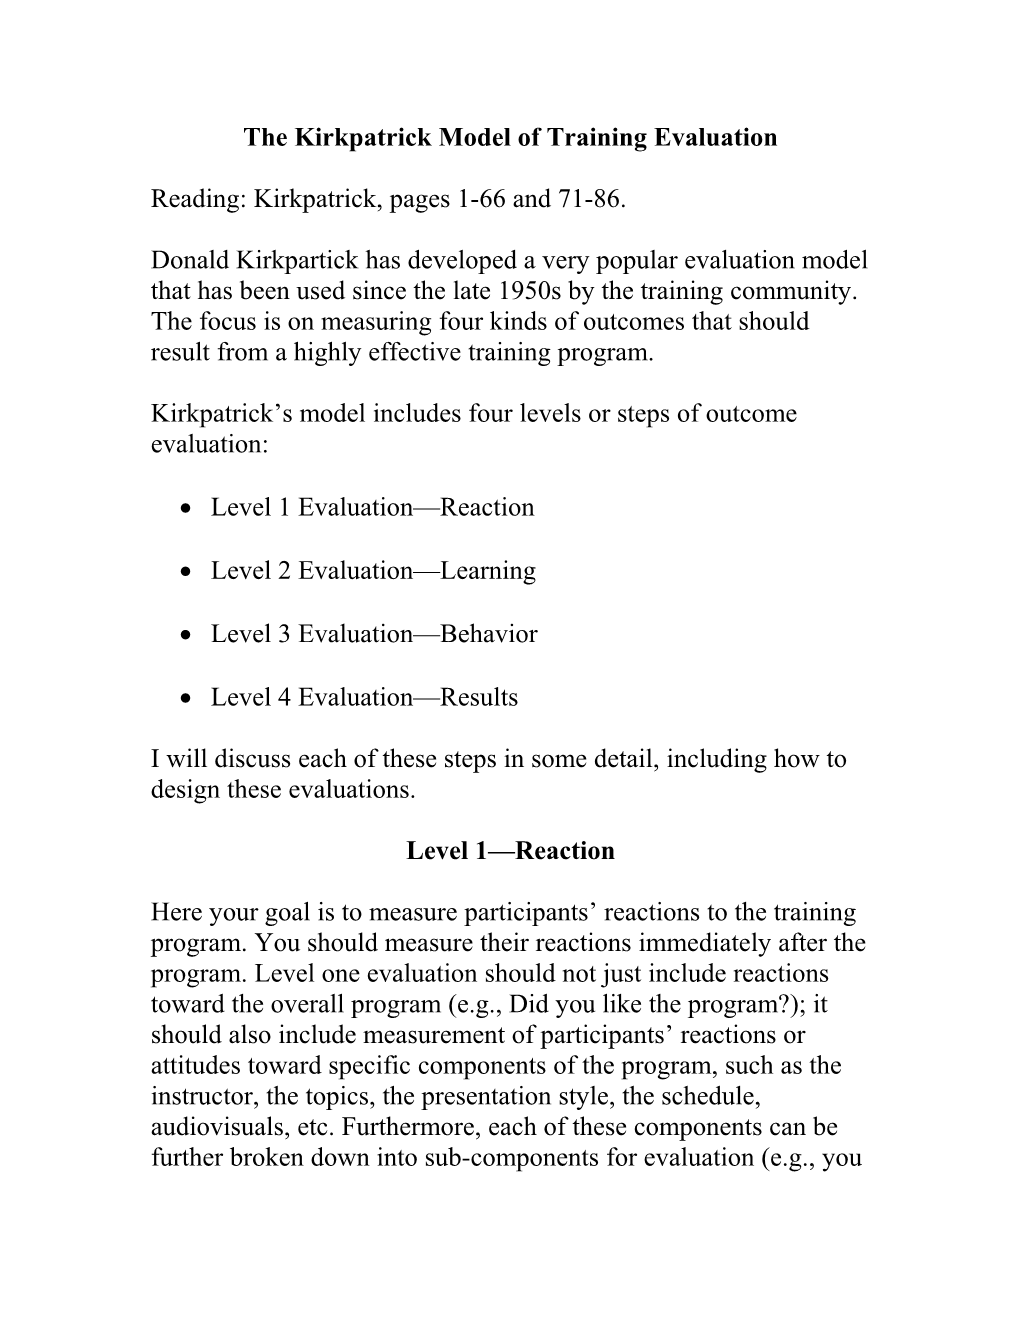 Kirkpatrick S Four-Level Model of Training Evaluation